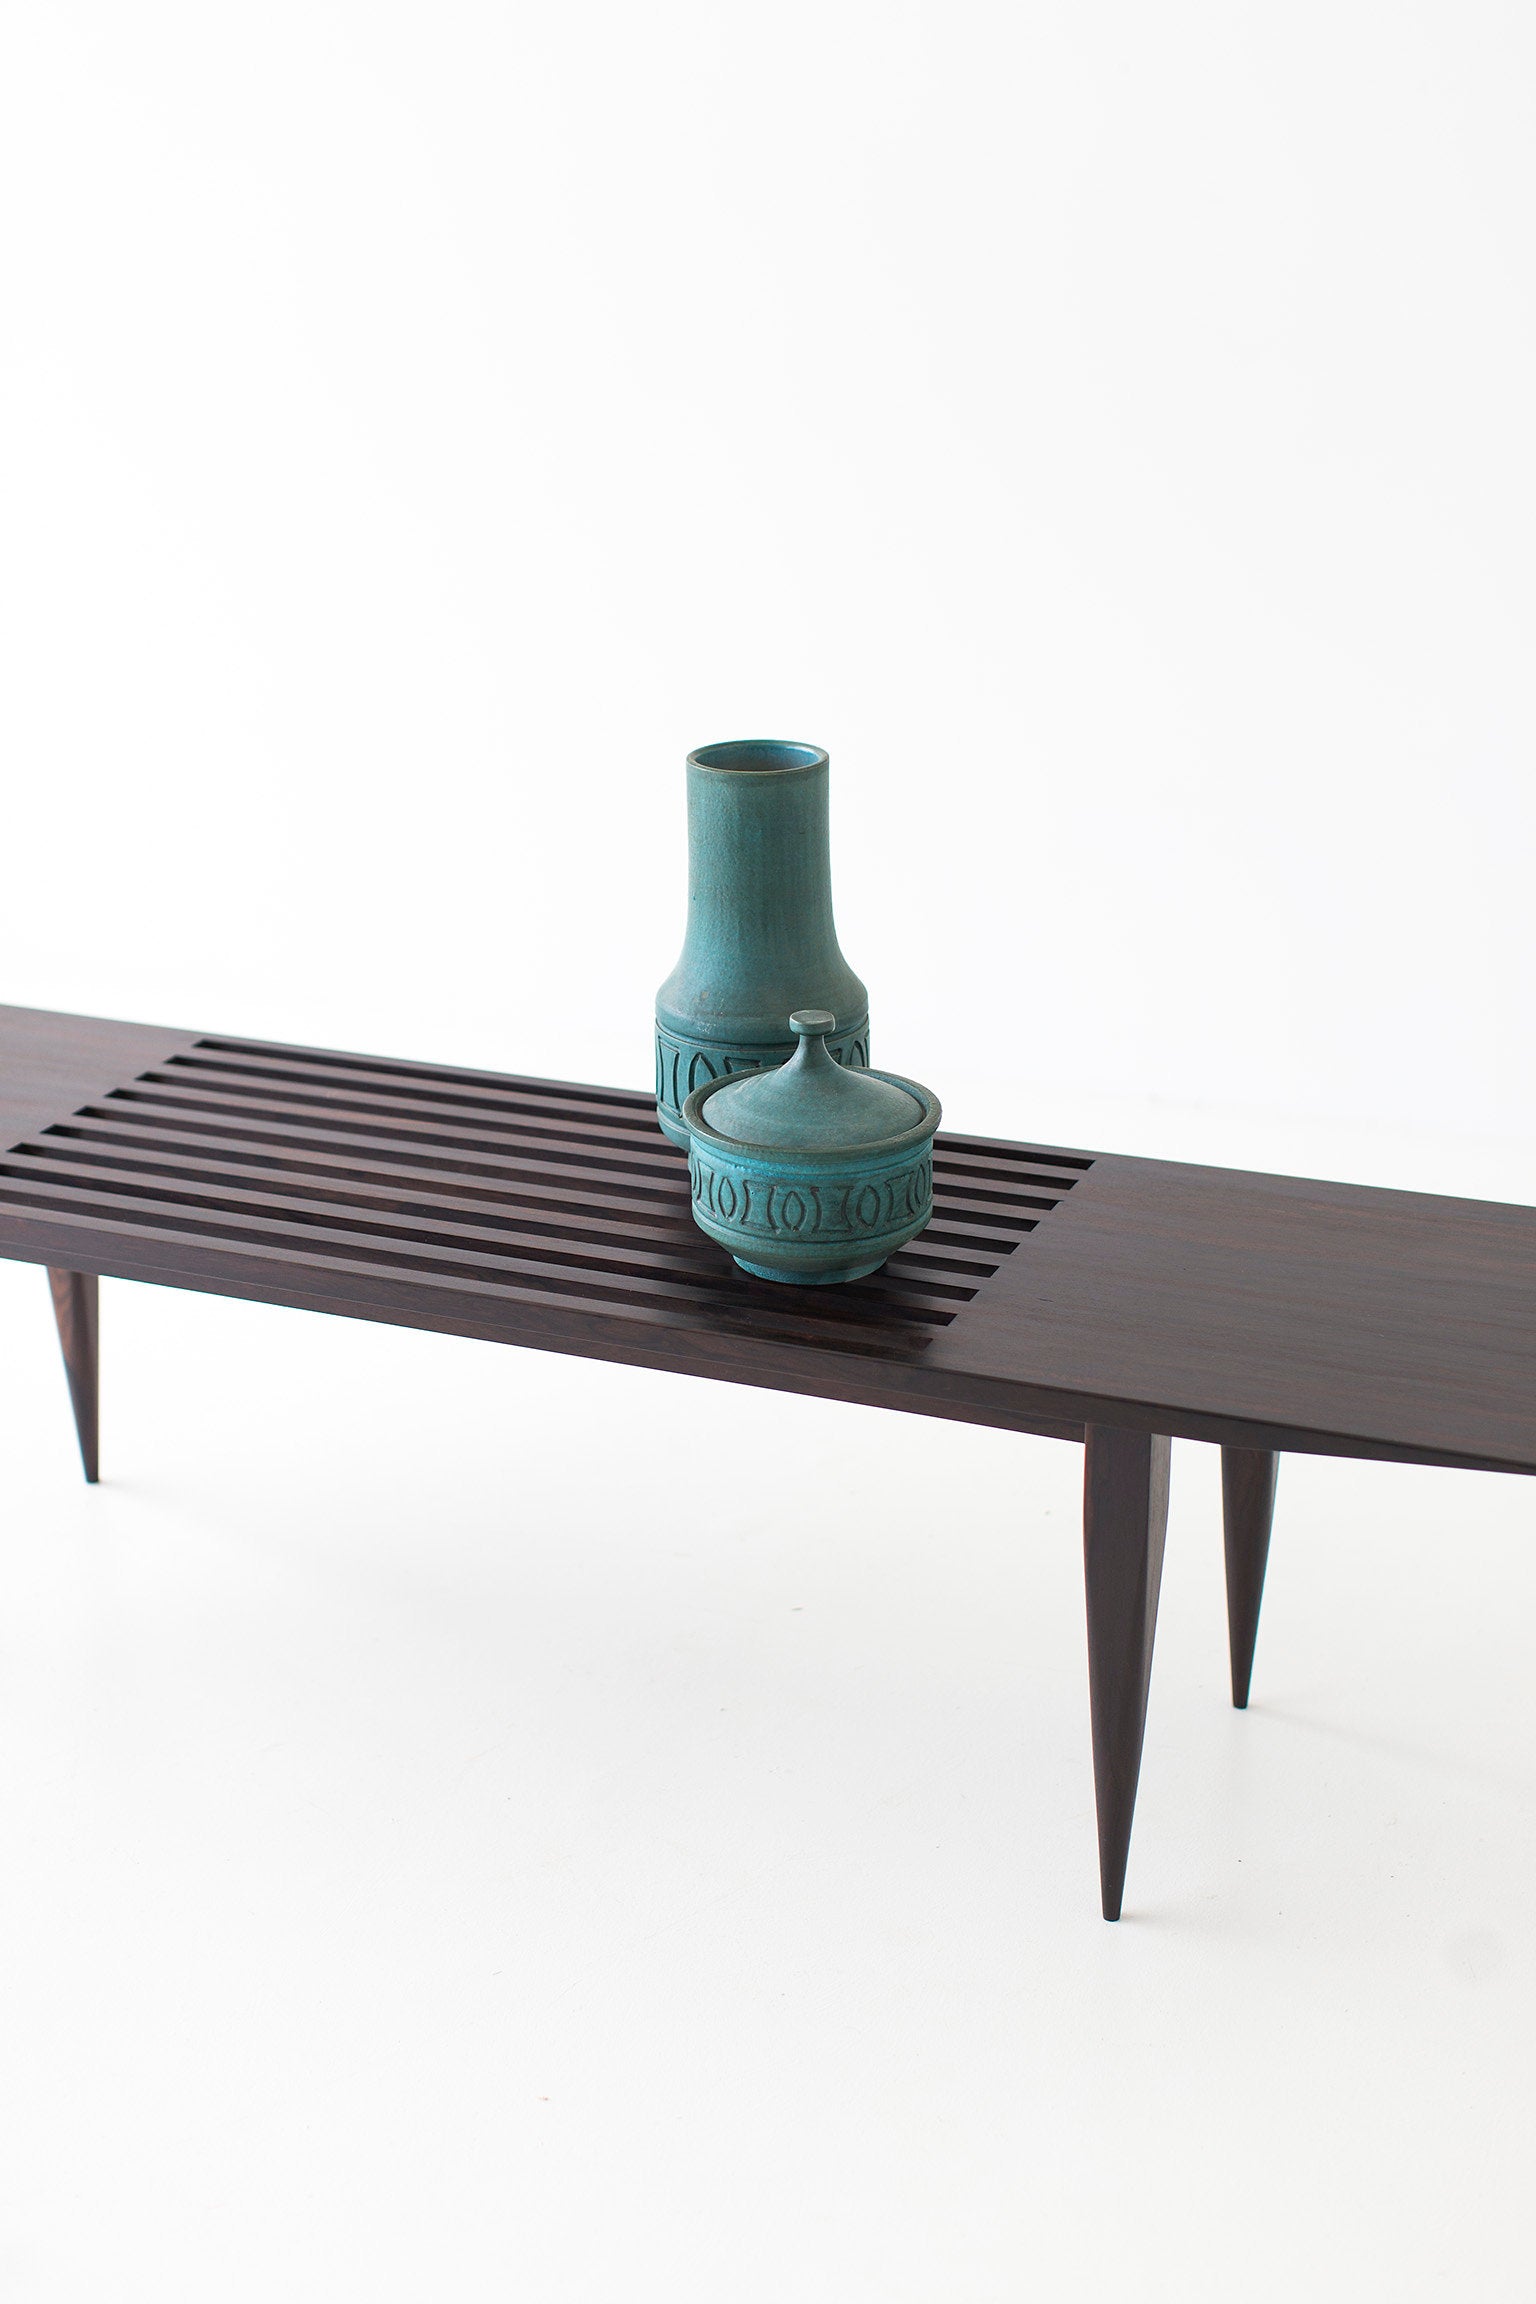 modern-slatted-bench-1602-j-bench-craft-associates-furniture-10